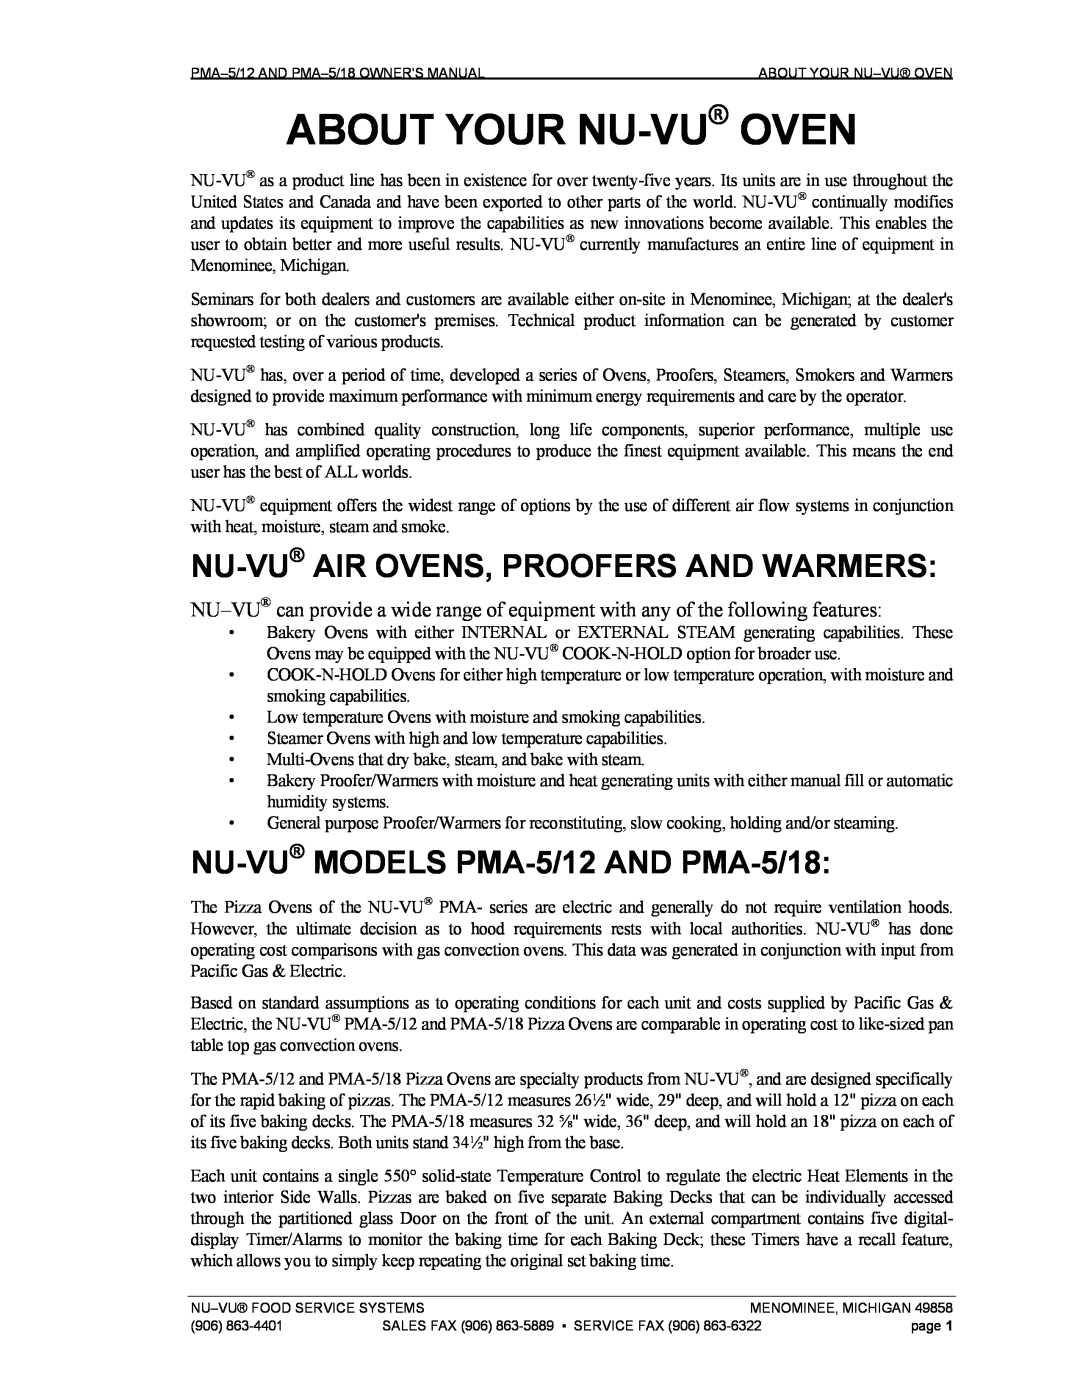 Nu-Vu PMA -5/12, PMA 5/18 About Your Nu-Vu Oven, Nu-Vu Air Ovens, Proofers And Warmers, NU-VU MODELS PMA-5/12AND PMA-5/18 